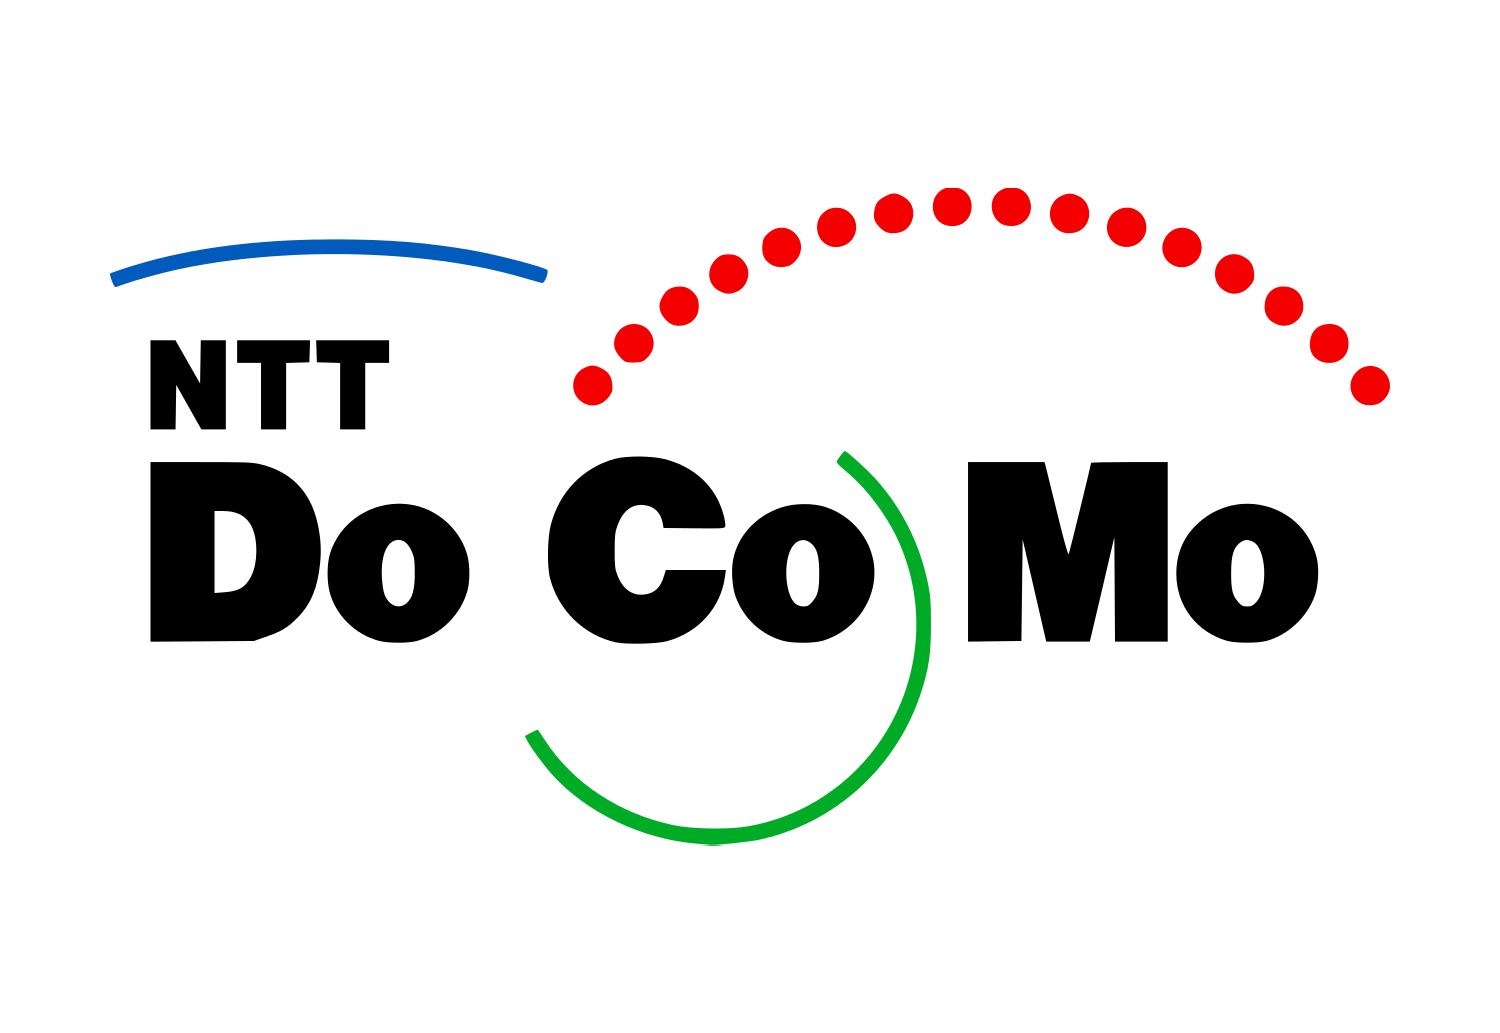 DOCOMO Logo - NTT DoCoMo logo | Dwglogo